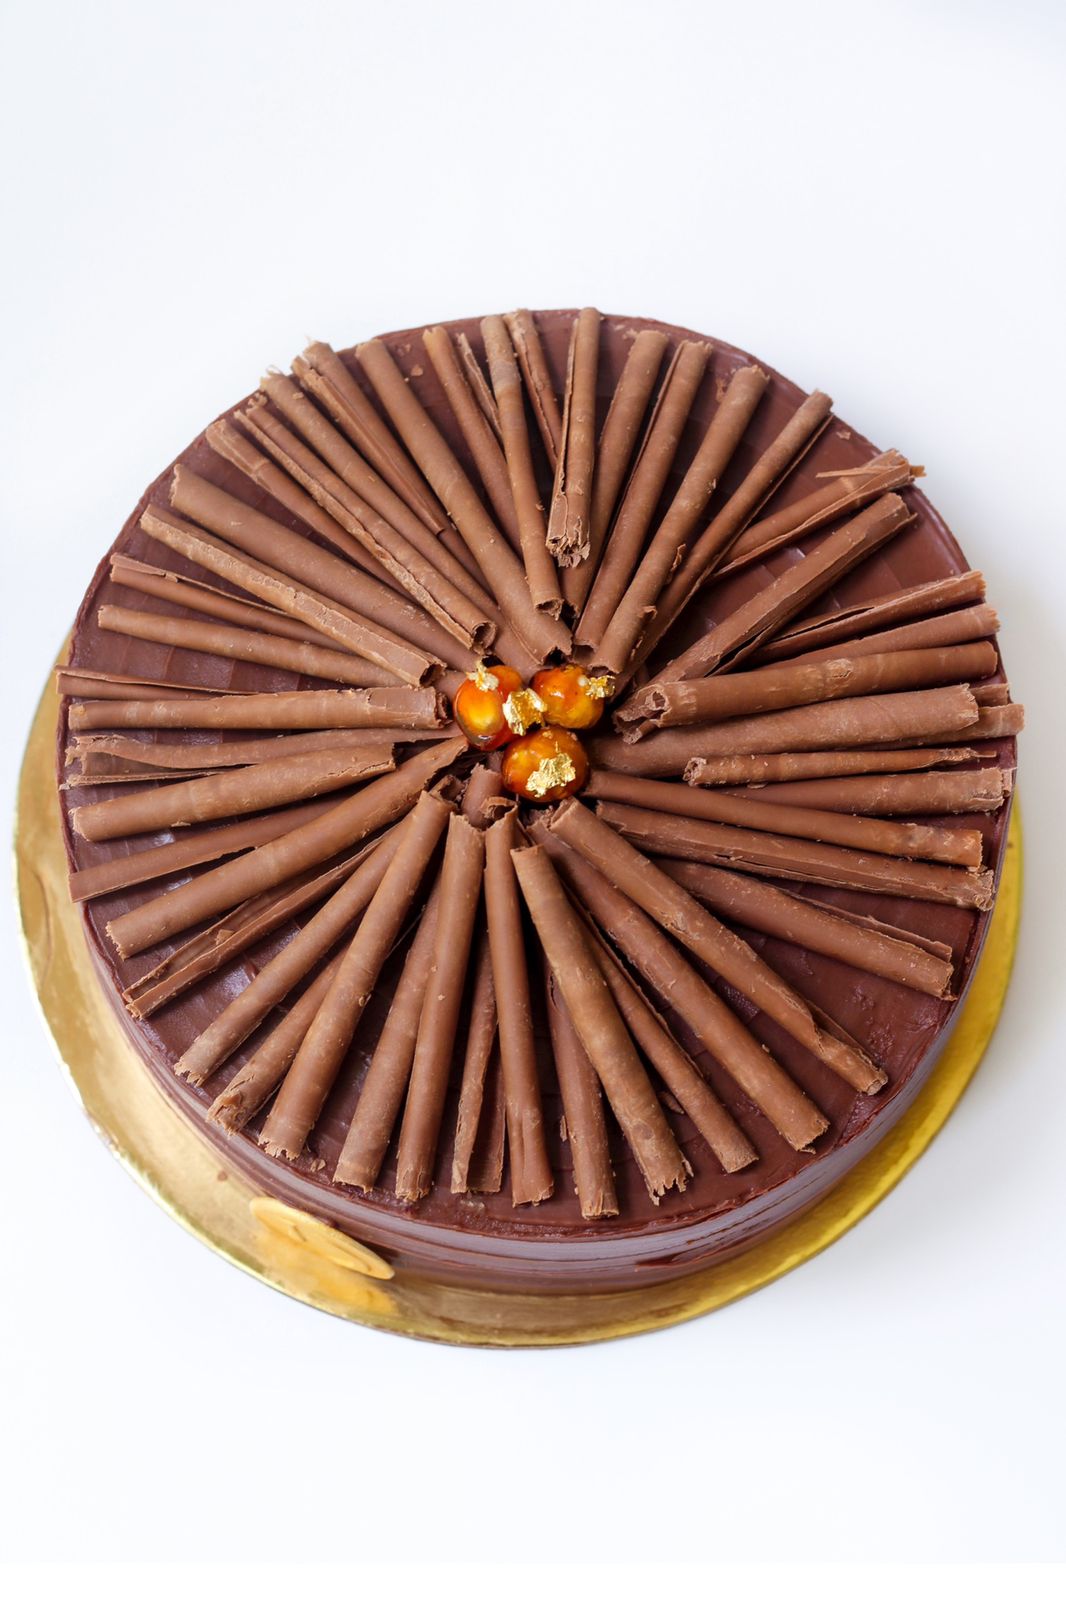 Eggless Chocolate Hazelnut Praline Cake